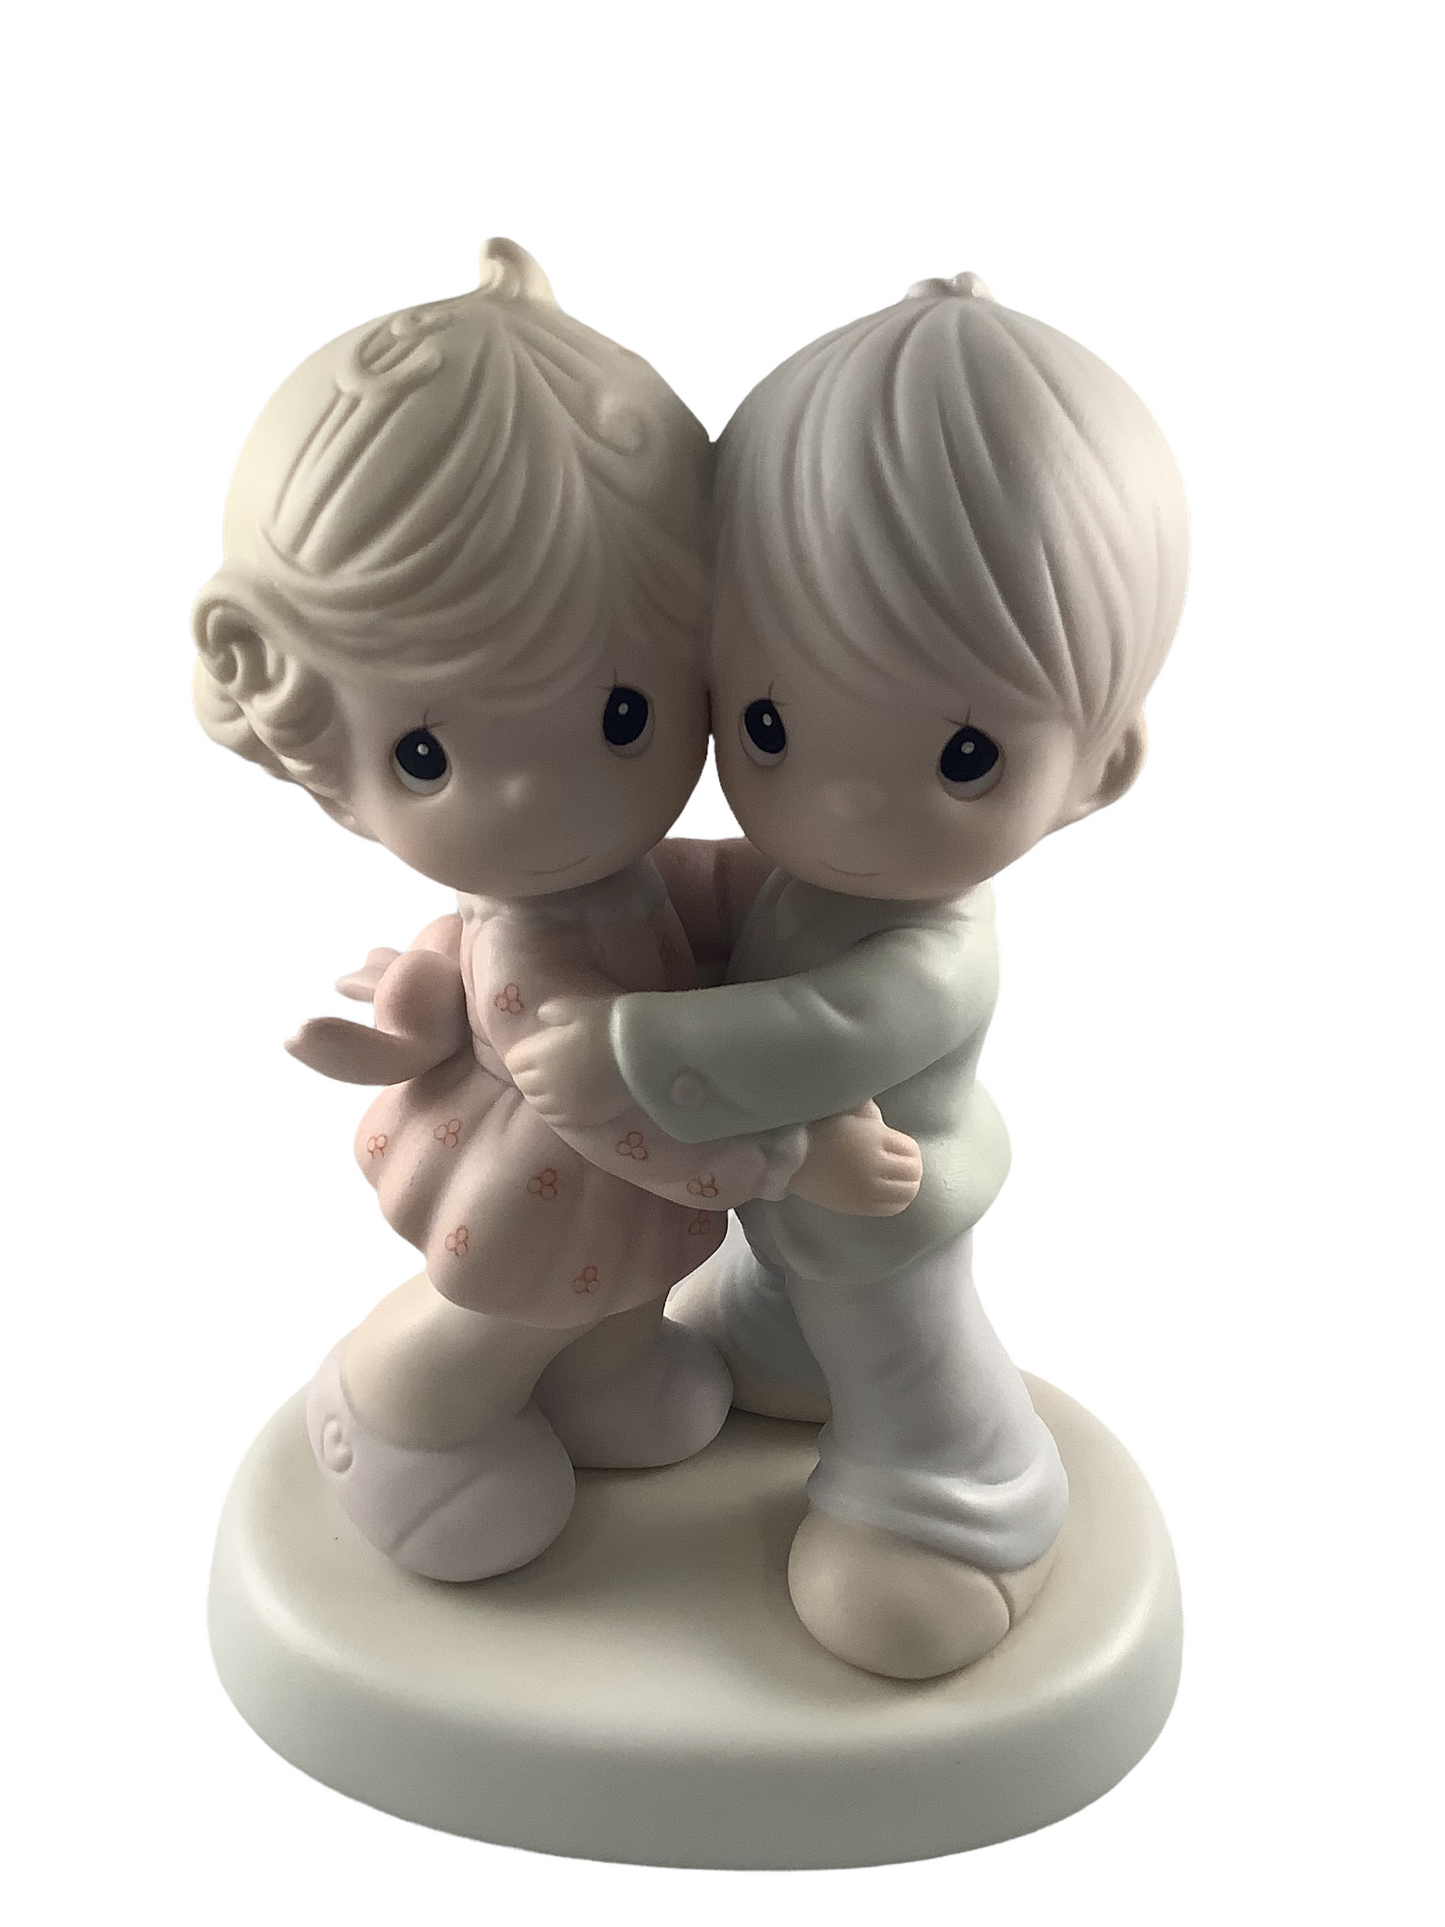 Hug One Another - Precious Moment Figurine